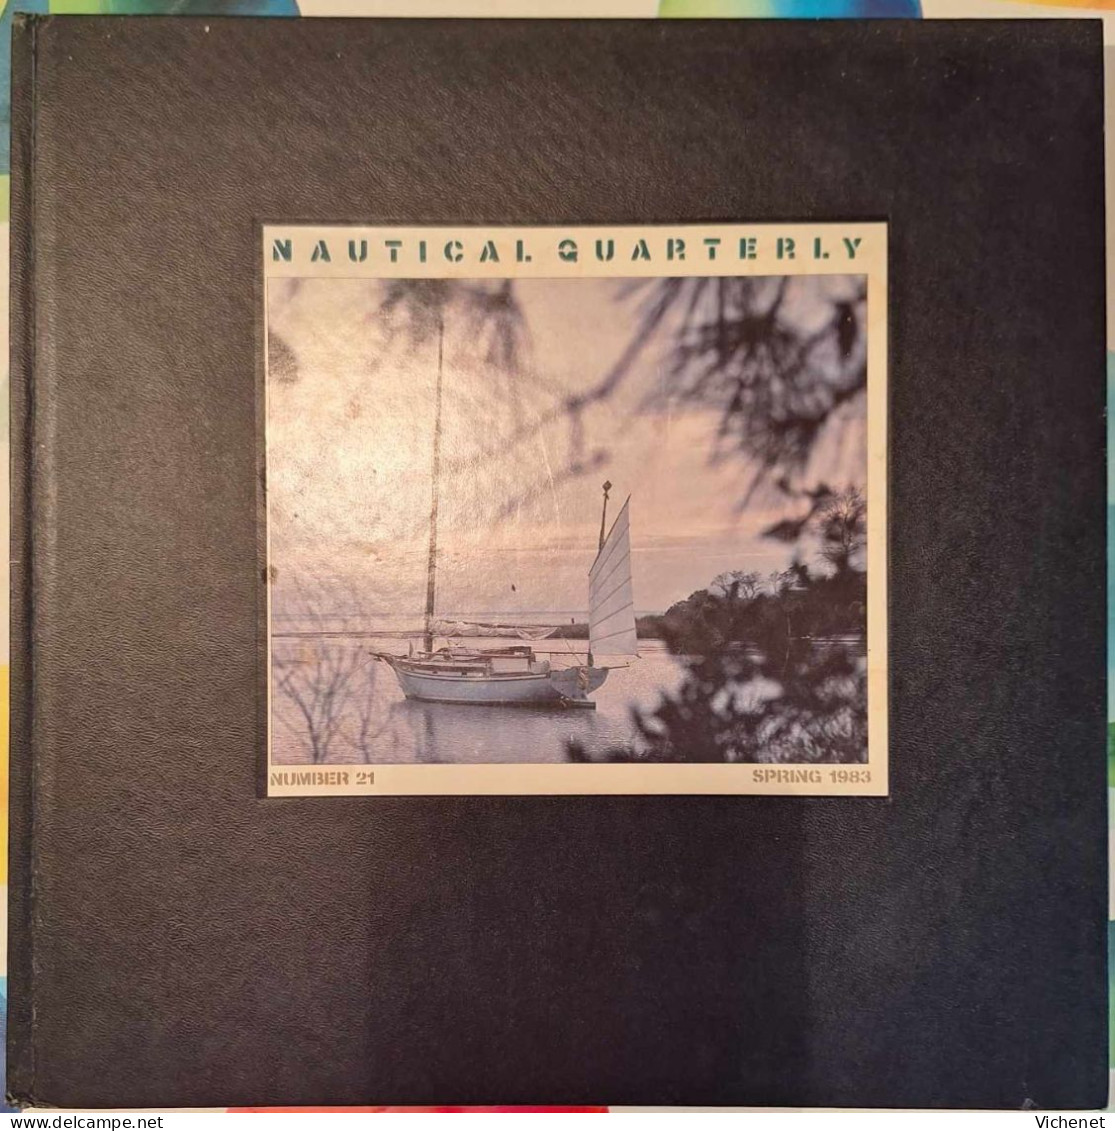 Nautical Quaterly - Number 21 - Spring 1983 - Travel/ Exploration